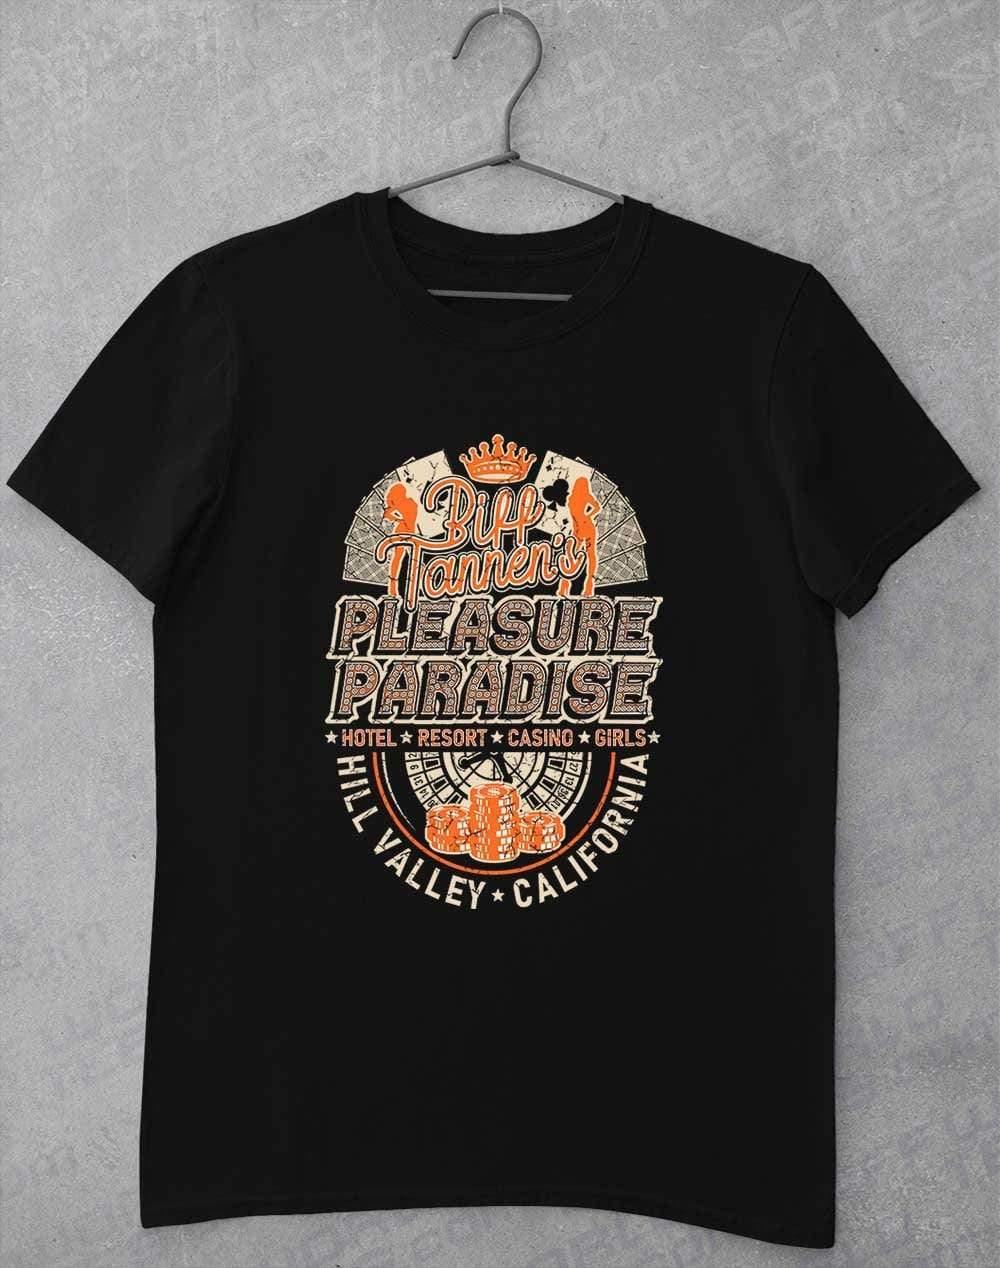 Biff Tannen's Pleasure Paradise T-Shirt S / Black  - Off World Tees